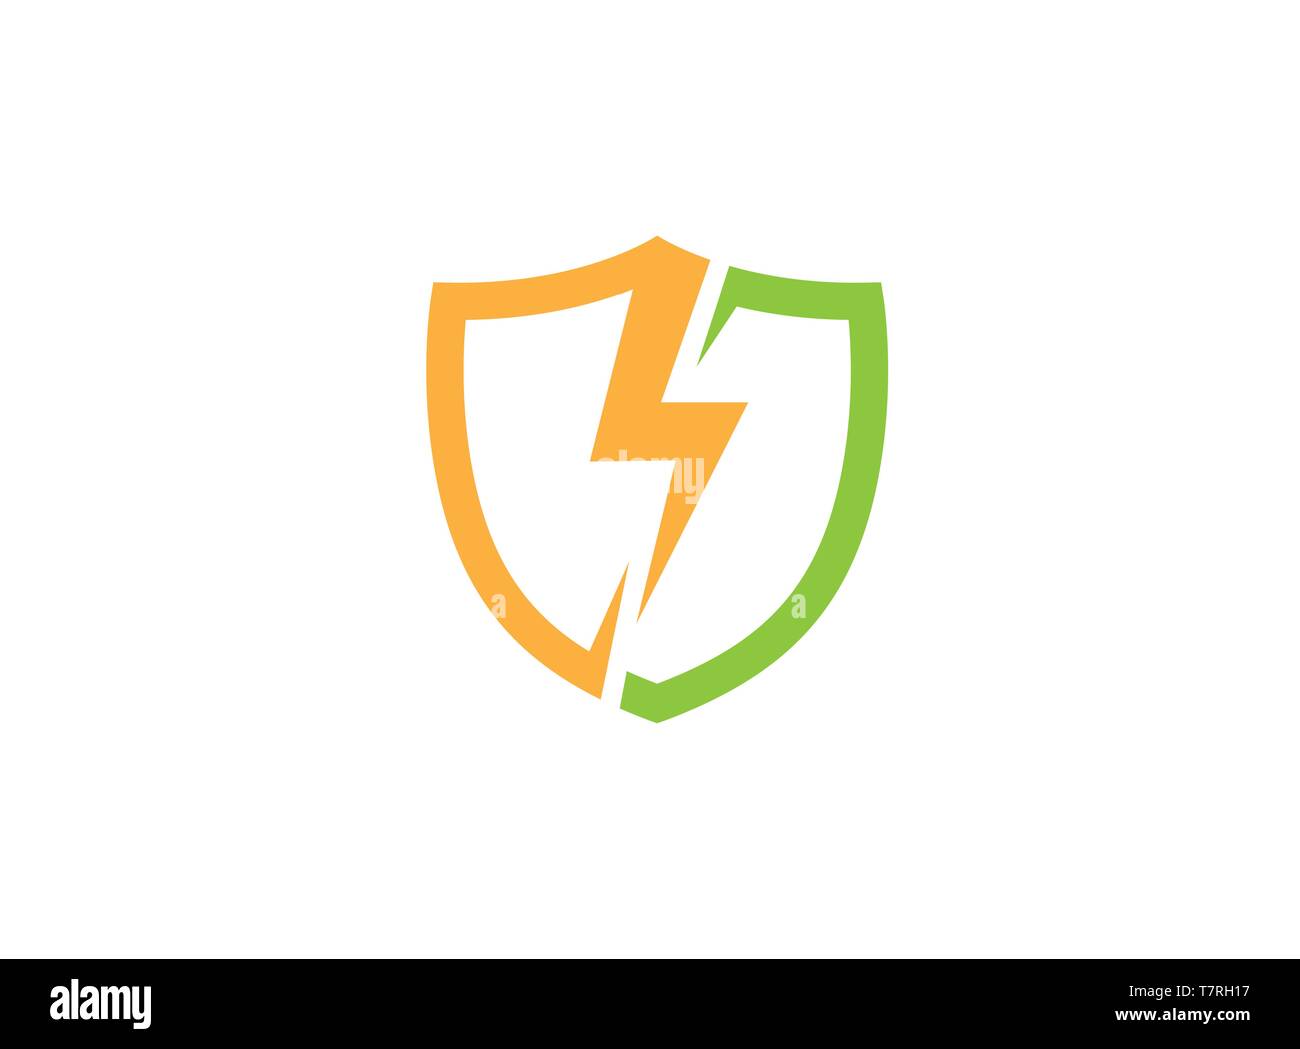 Department Of Shield By Lightning Strike Logo Design Illustration